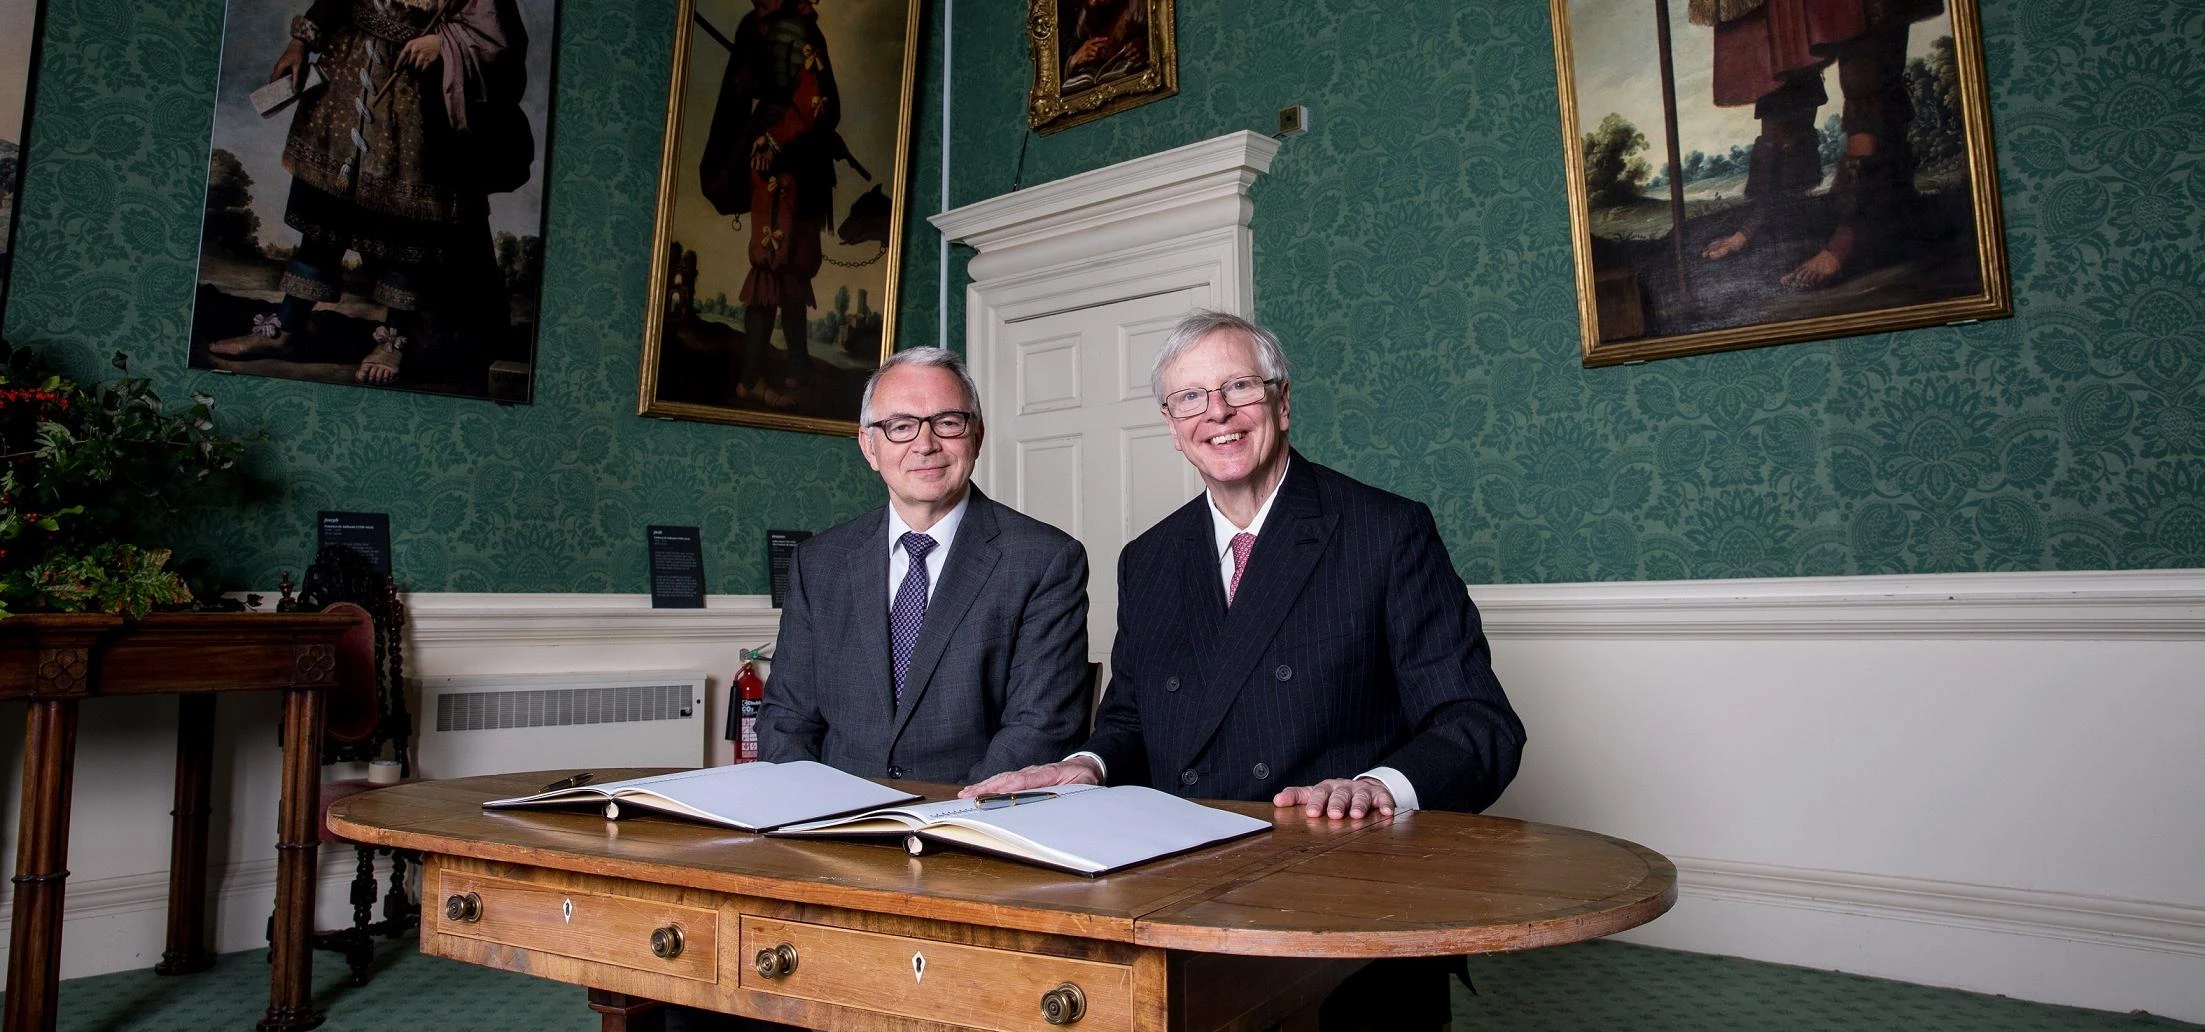 Professor Stuart Corbridge, Vice-Chancellor of Durham University, signs the partnership agreement wi